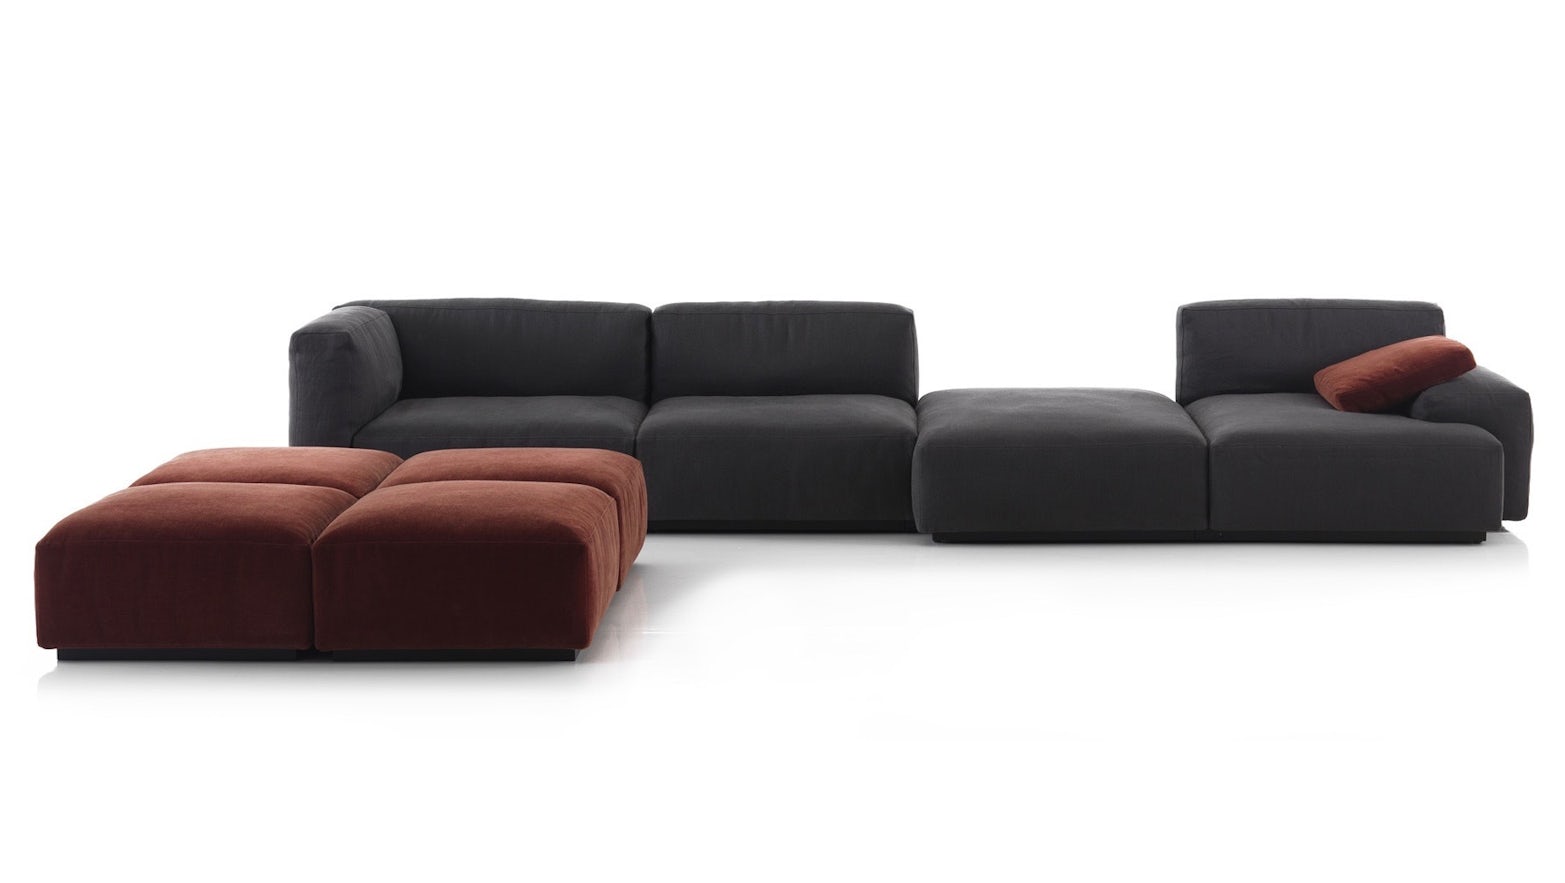 Mex-Cube-Sofa-Seating-System-Cassina-4